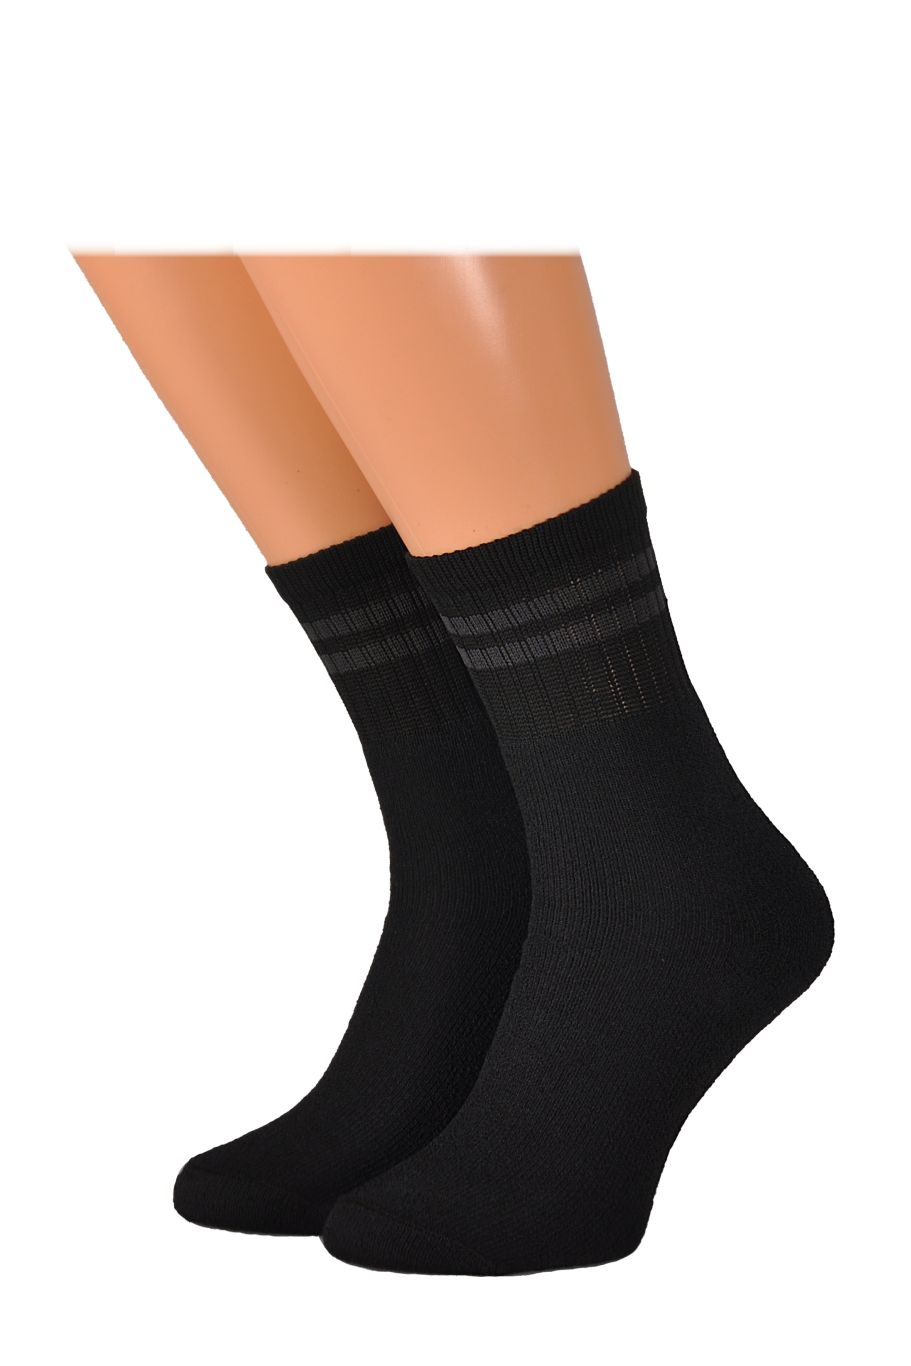 Black socks PNG image    图片编号:8229